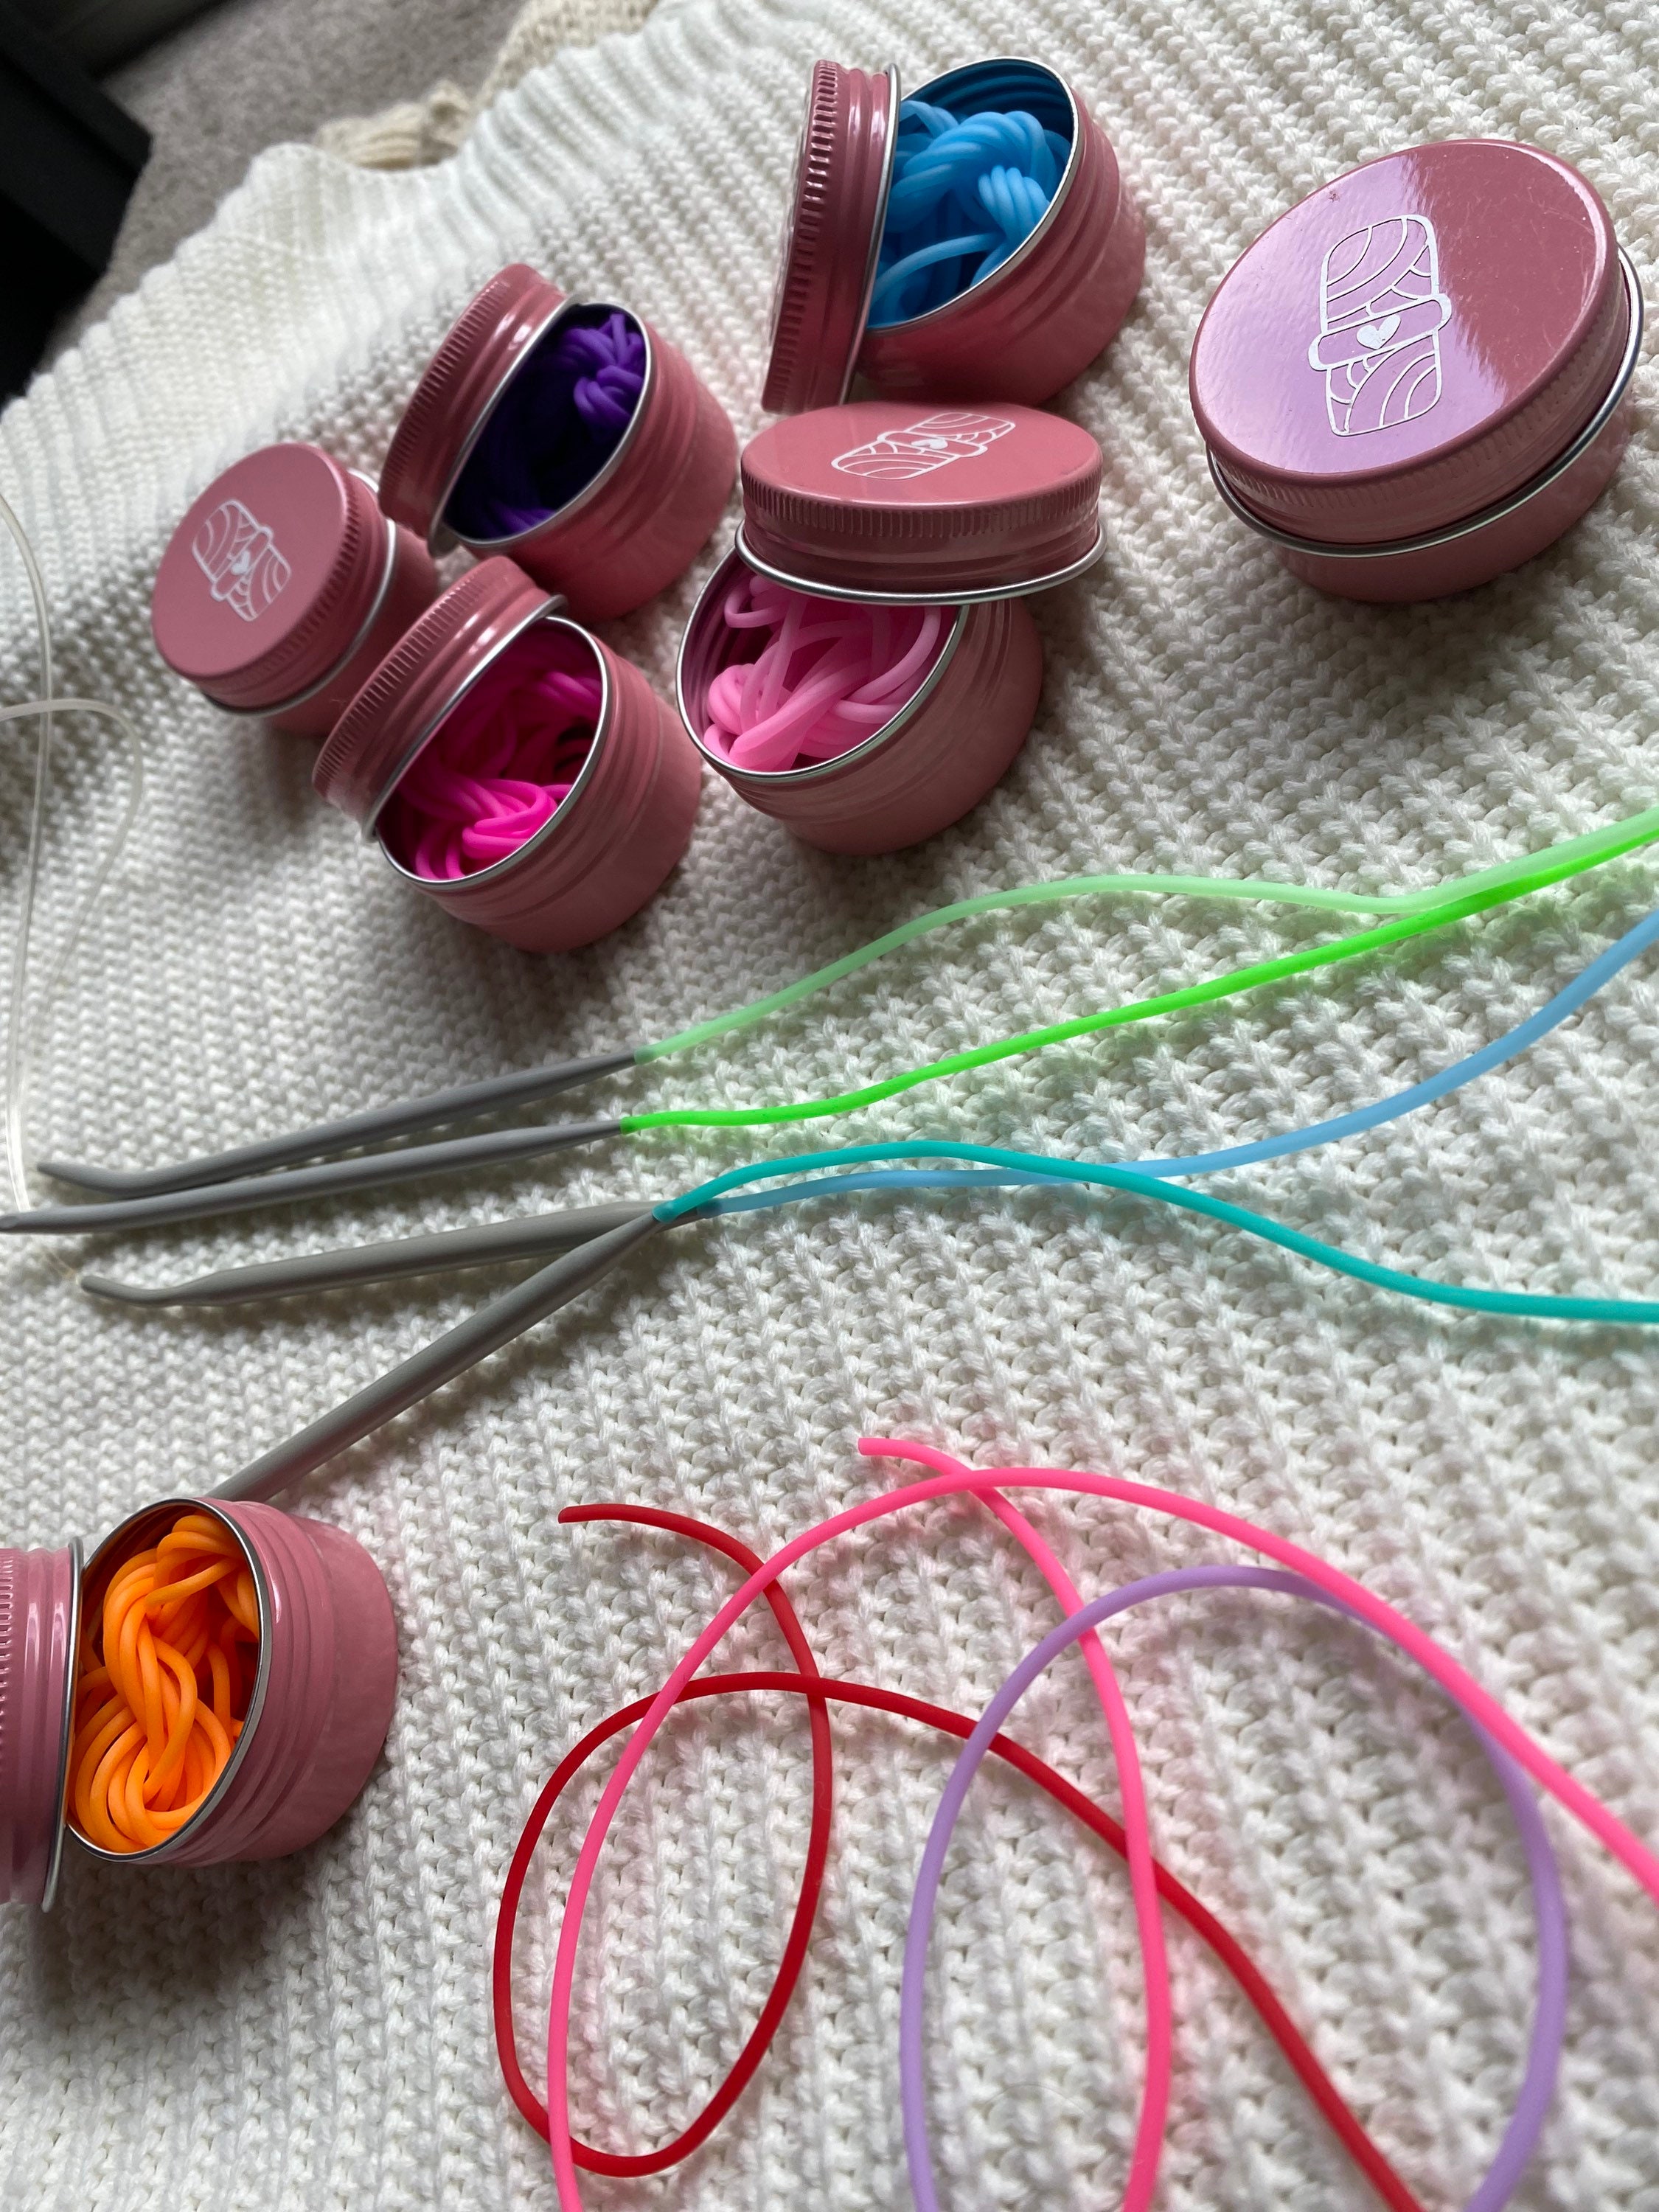 Vancool 18 PCS Knitting Stitch Holders - Yarn Stitch Holder Set for